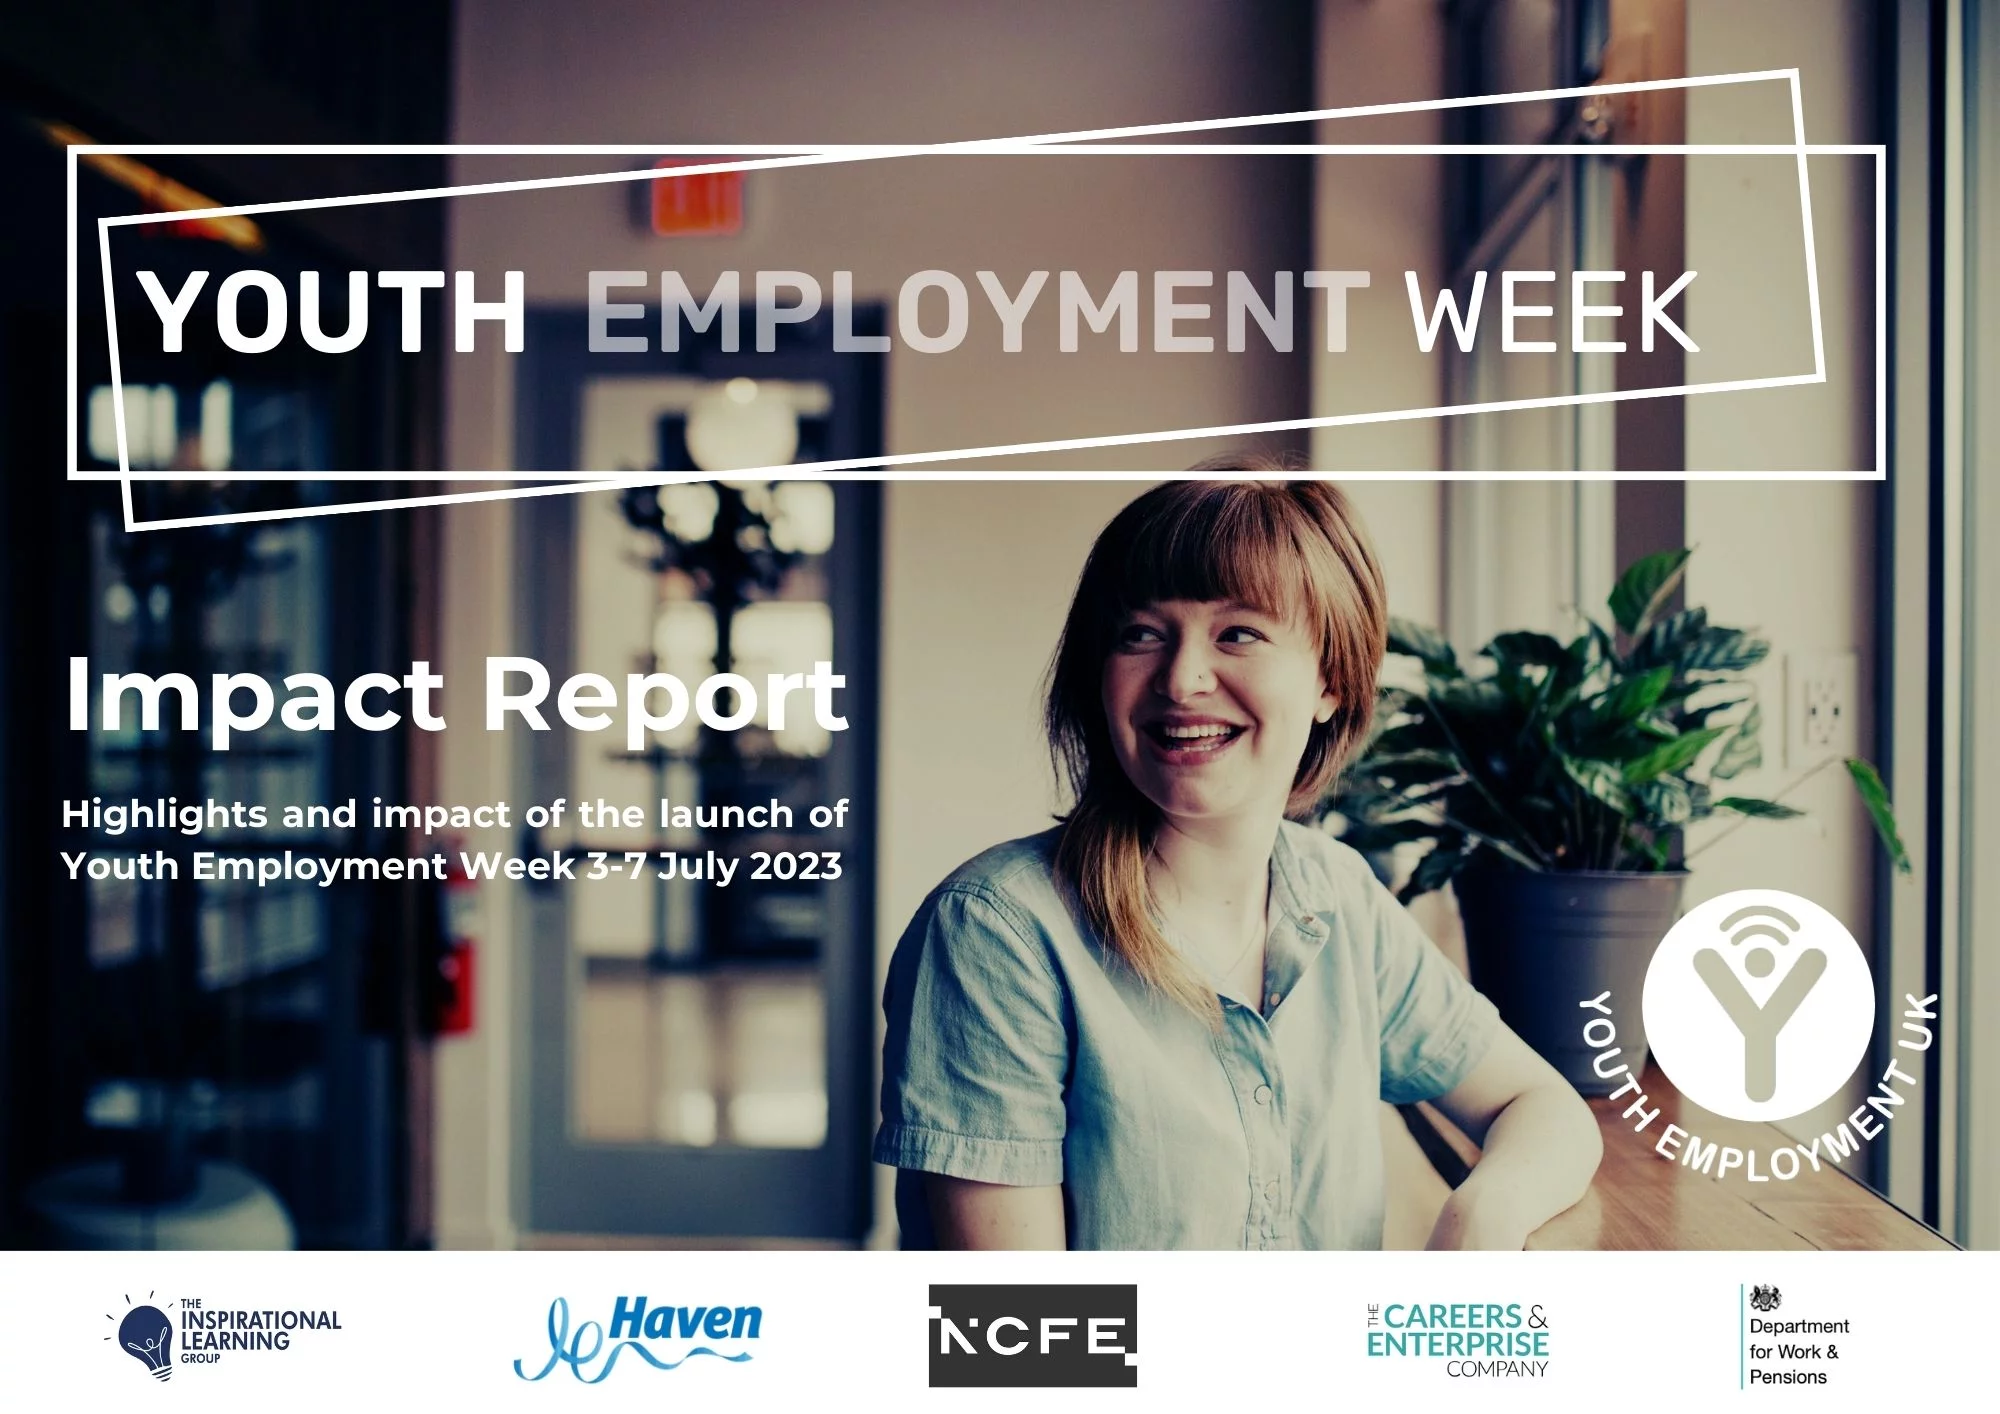 Youth employment week